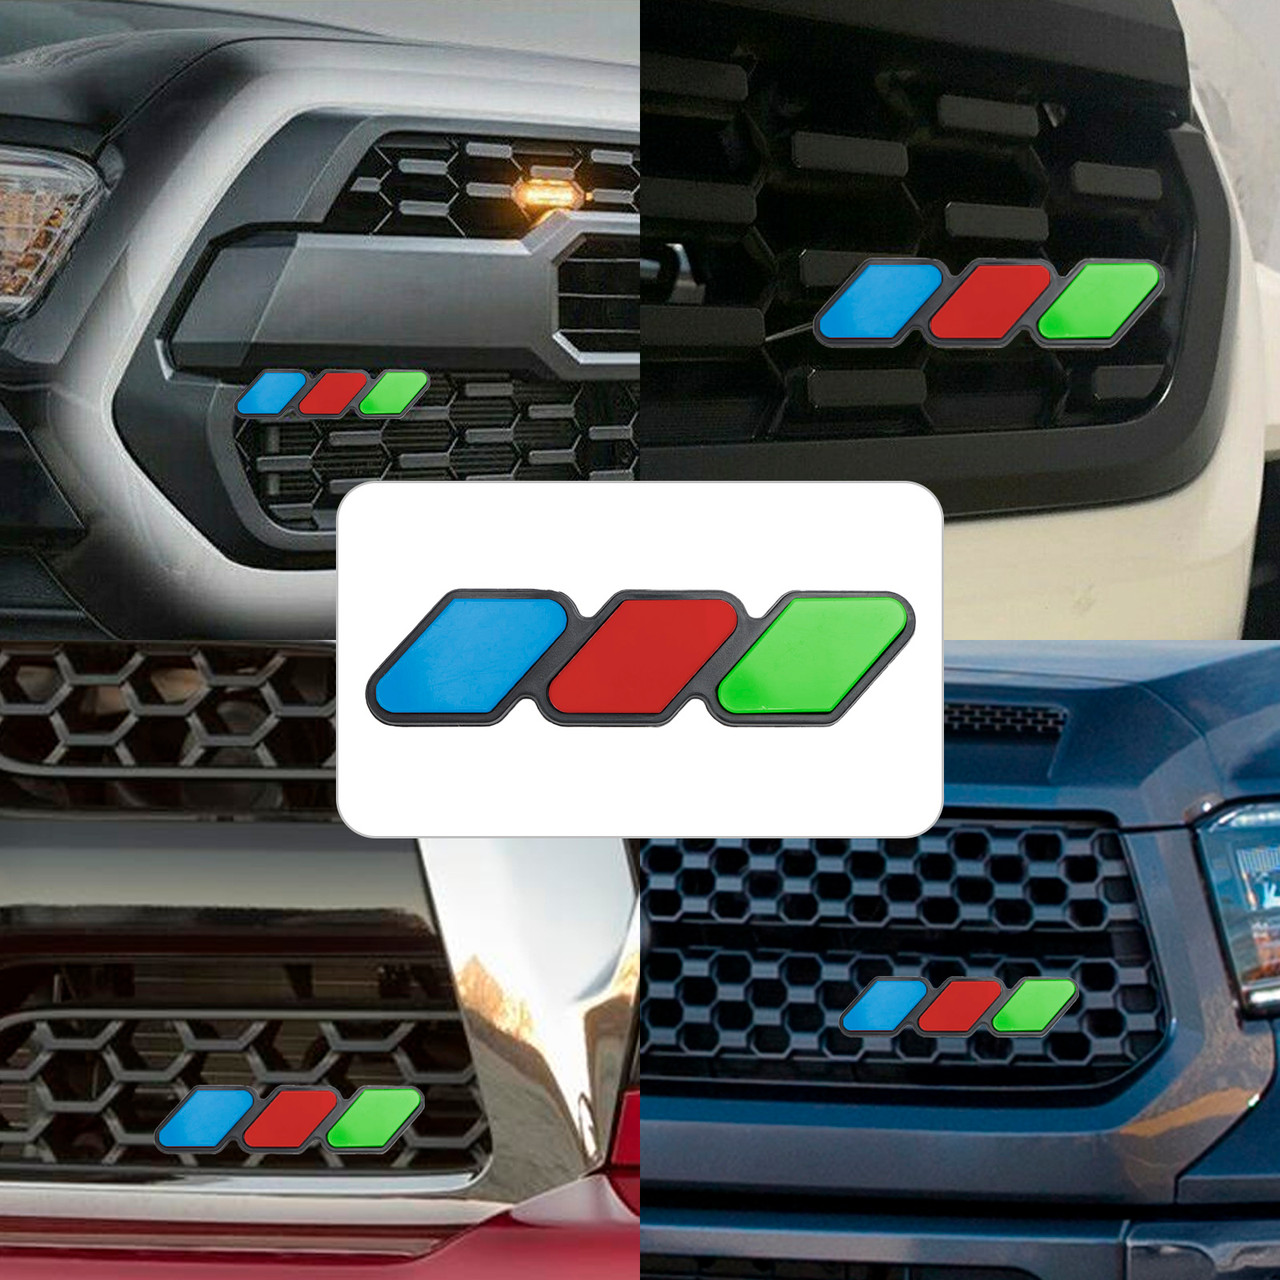 Tri-Color Grille Badge Emblem Car Accessories for Toyota Tacoma TRD Tundra RAV4 K